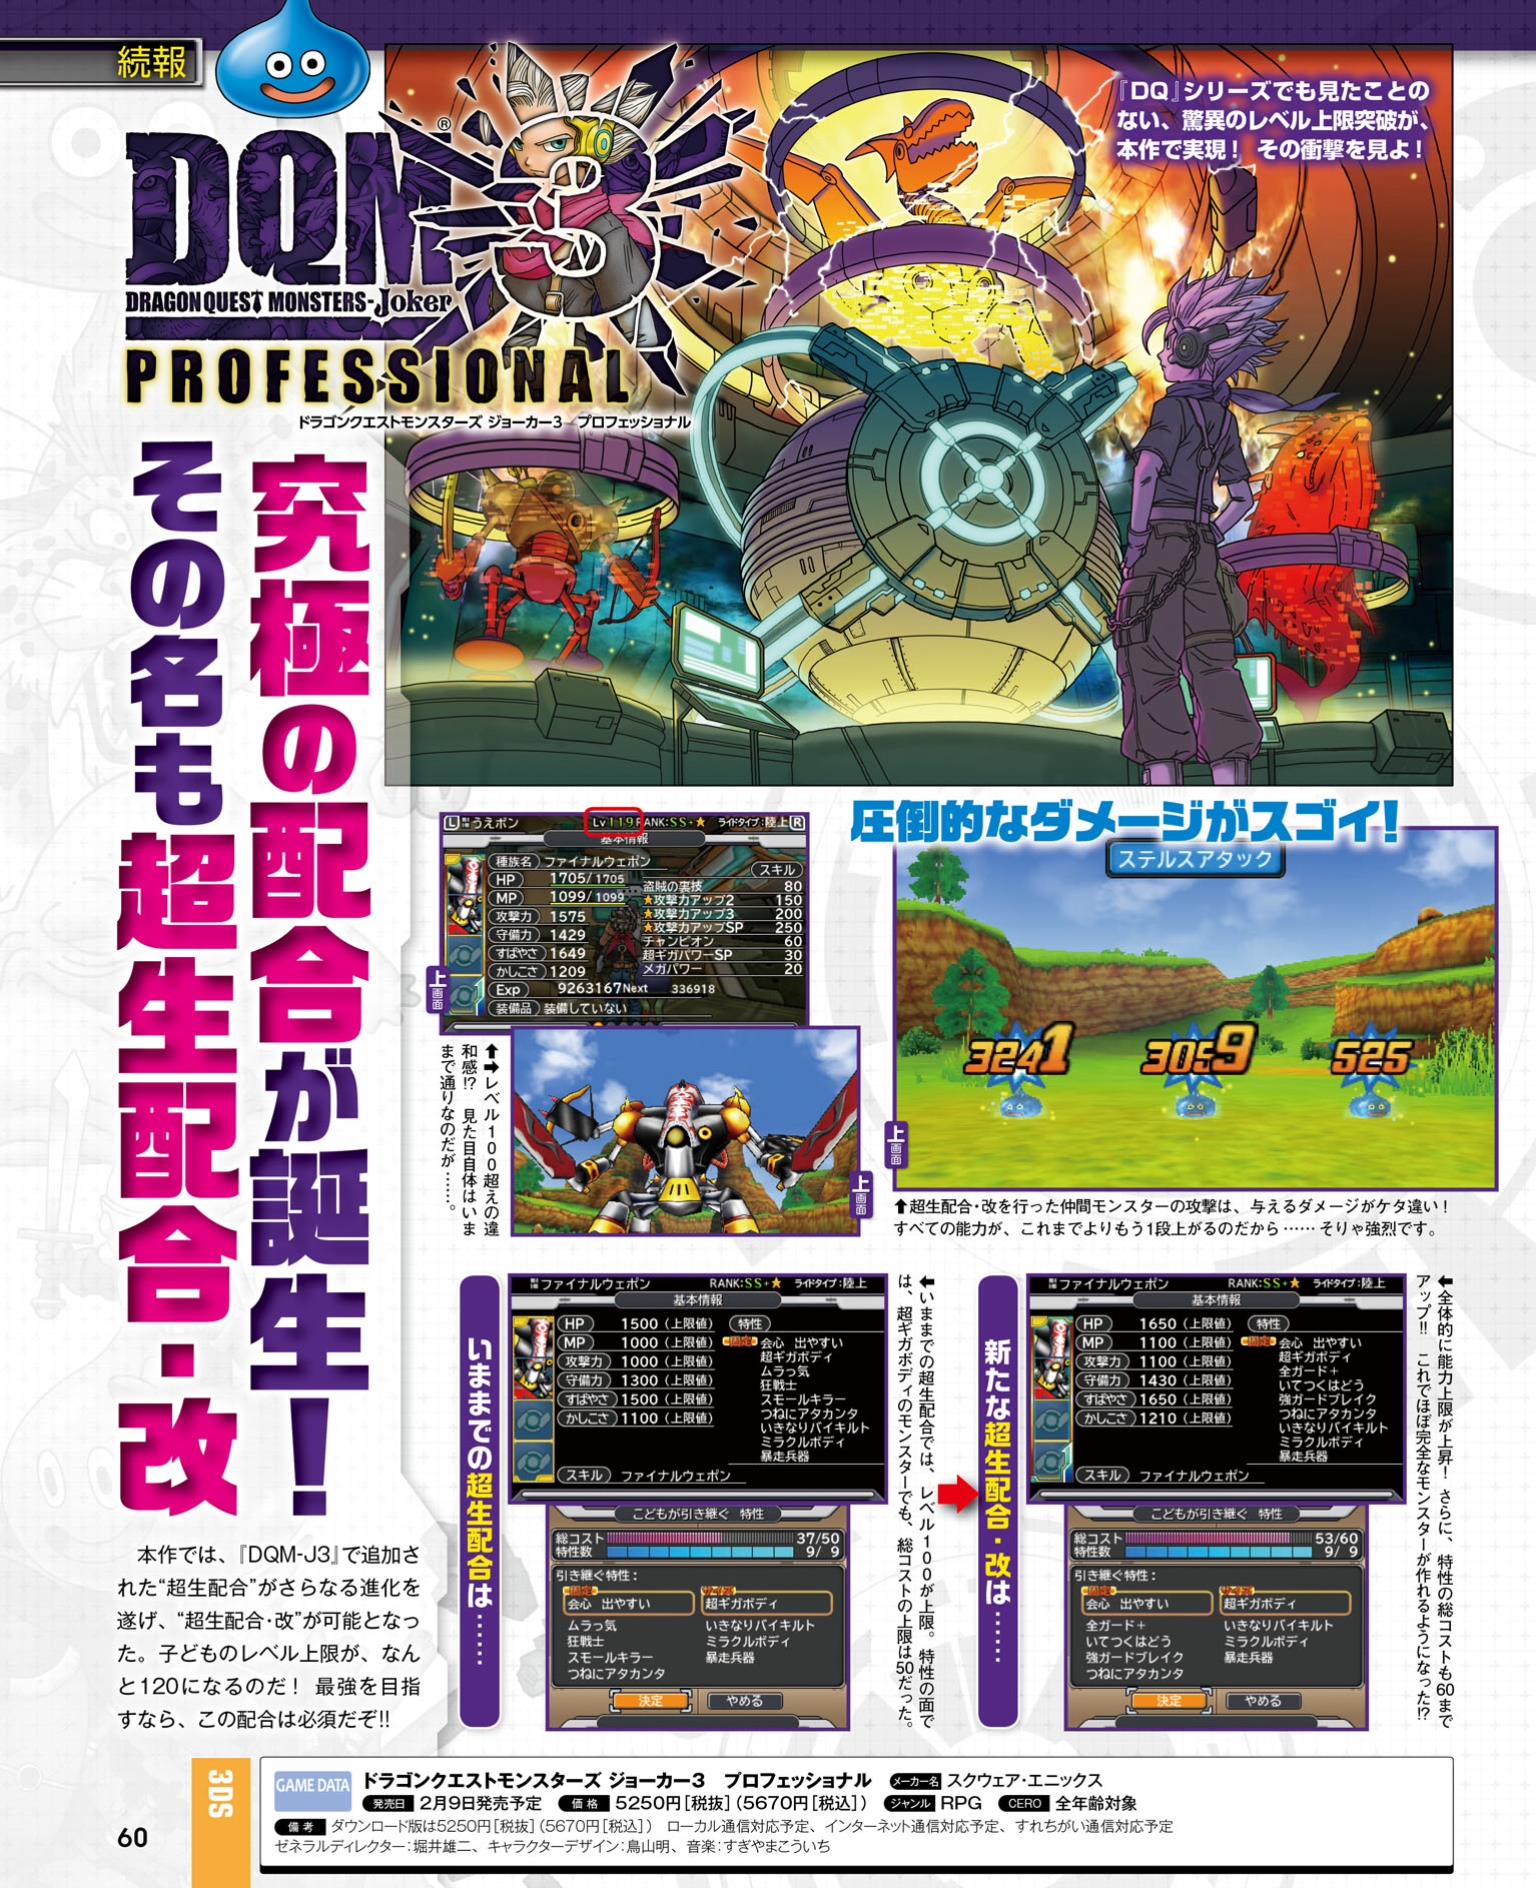 Scans Roundup Monster Hunter Xx Dragon Quest Monsters Joker 3 Professional Nintendo Everything